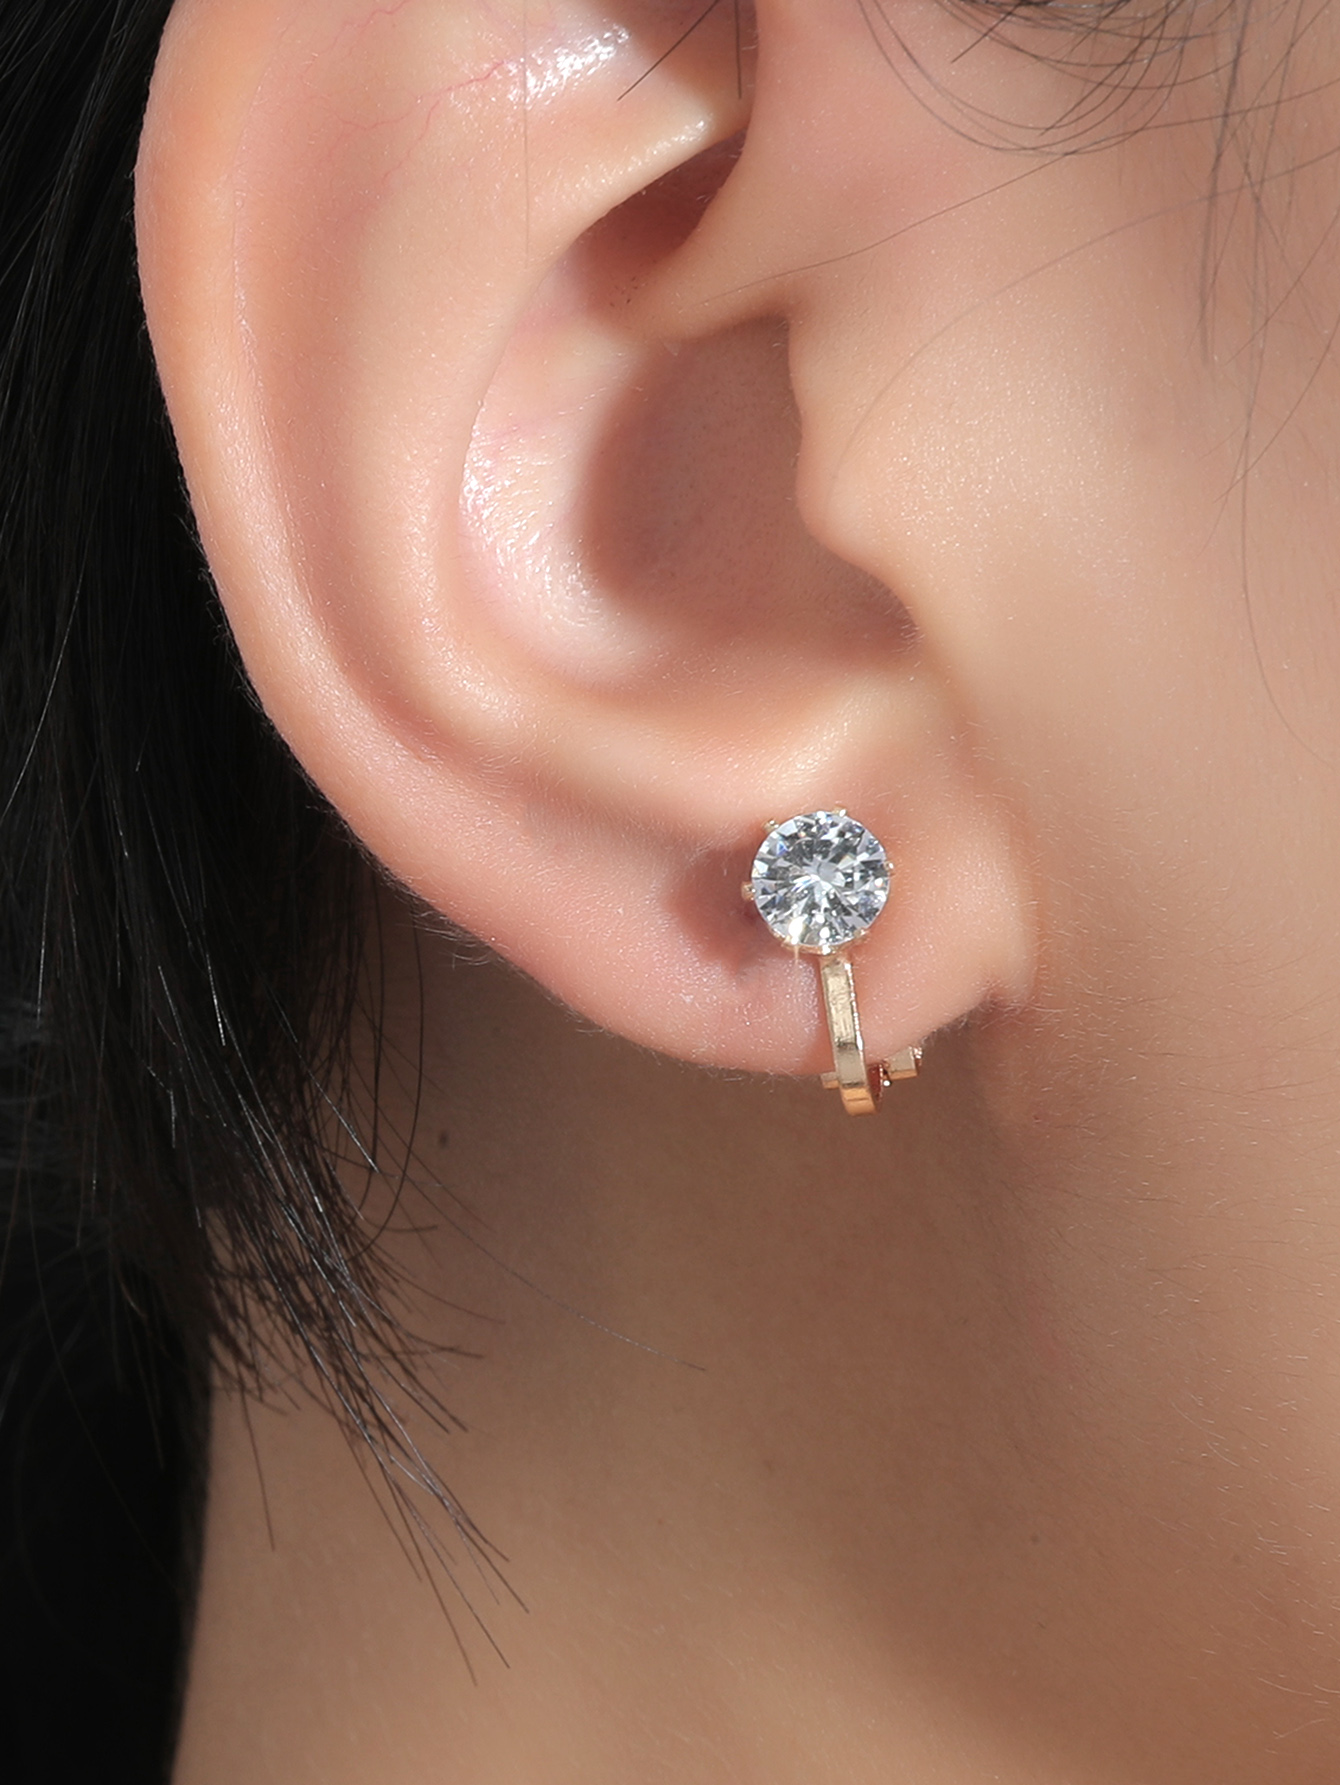 20pc Golden Tone Crystal Round Clip On Non Pierced Earrings I GCJ501 -Gold